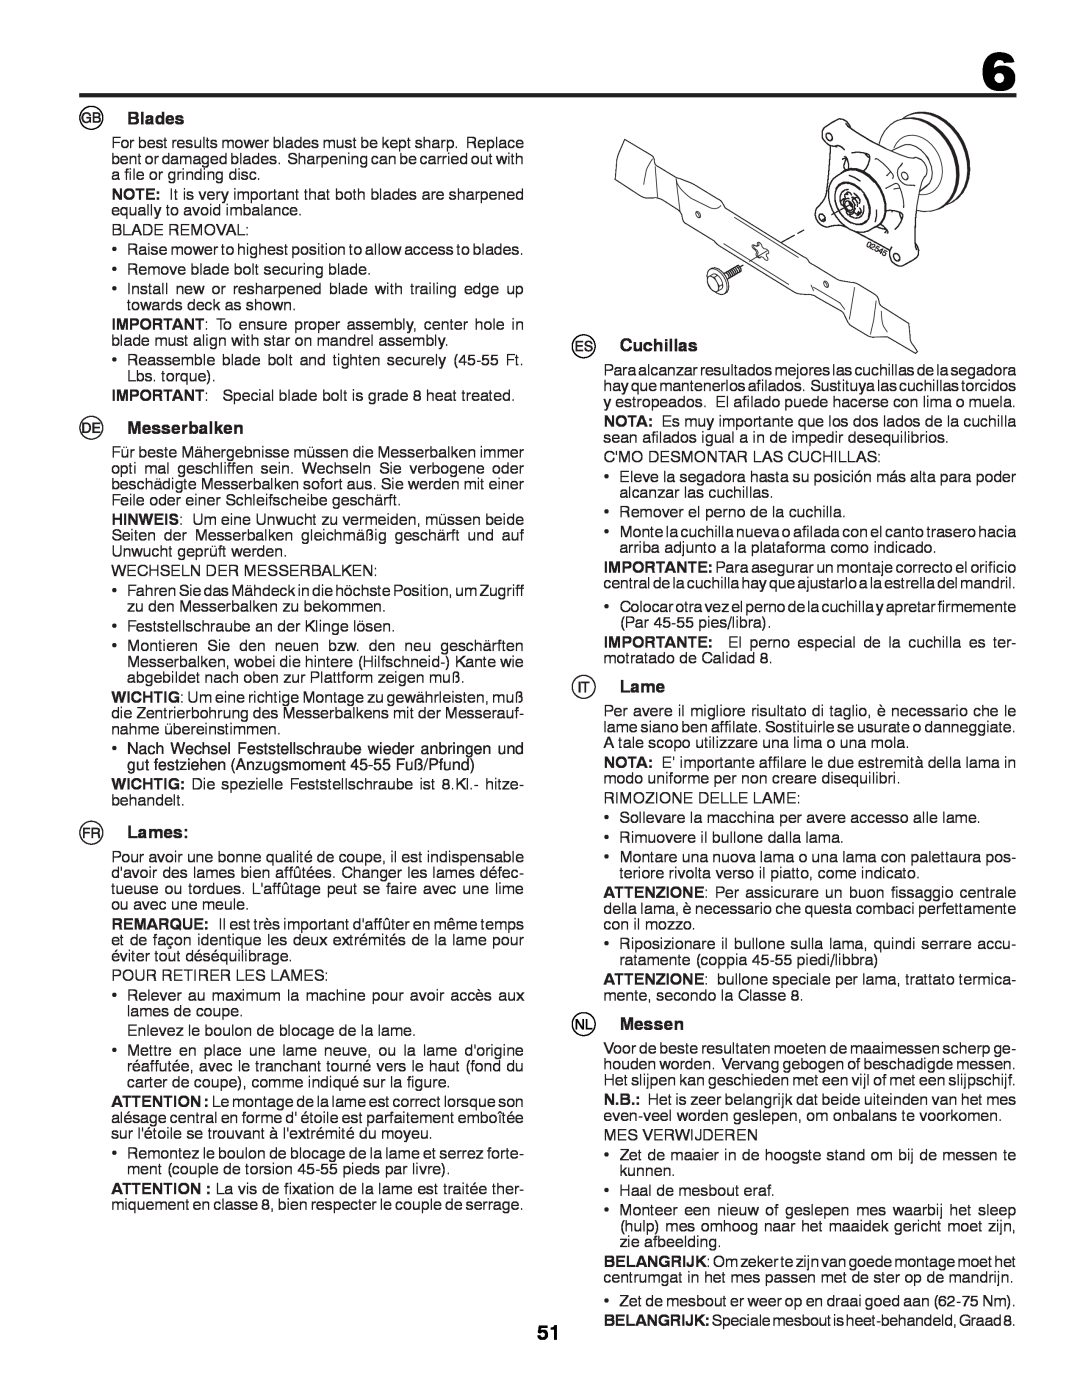 Husqvarna LTH152 instruction manual Blades, Messerbalken, Lames, Cuchillas, Messen 